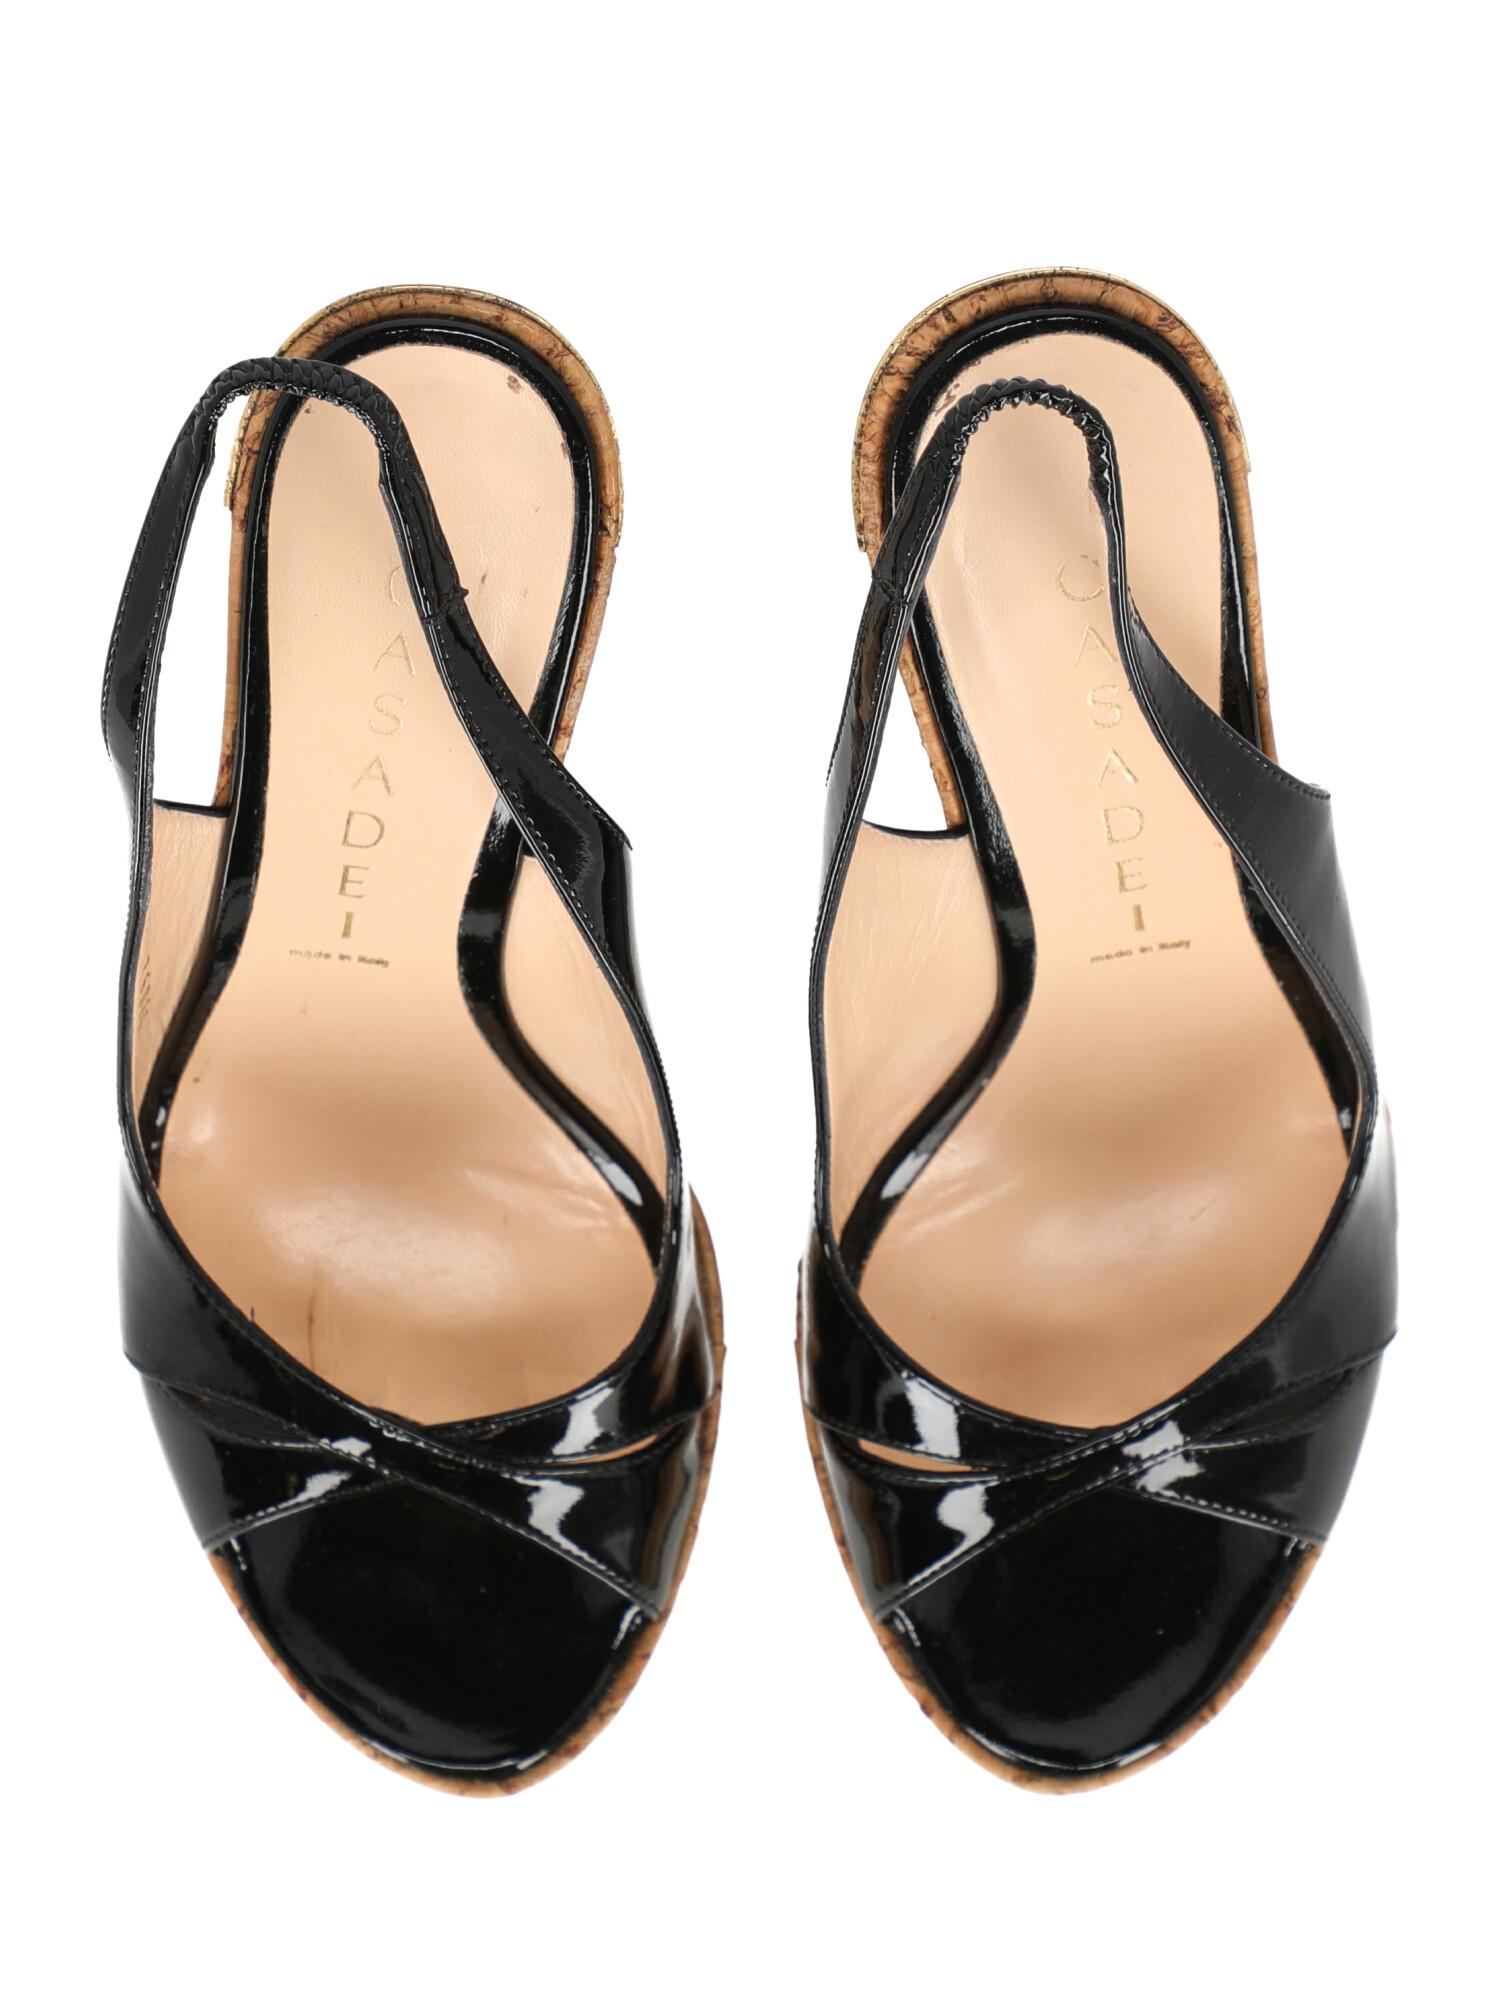 Casadei Woman Sandals Black Leather IT 36.5 For Sale 1